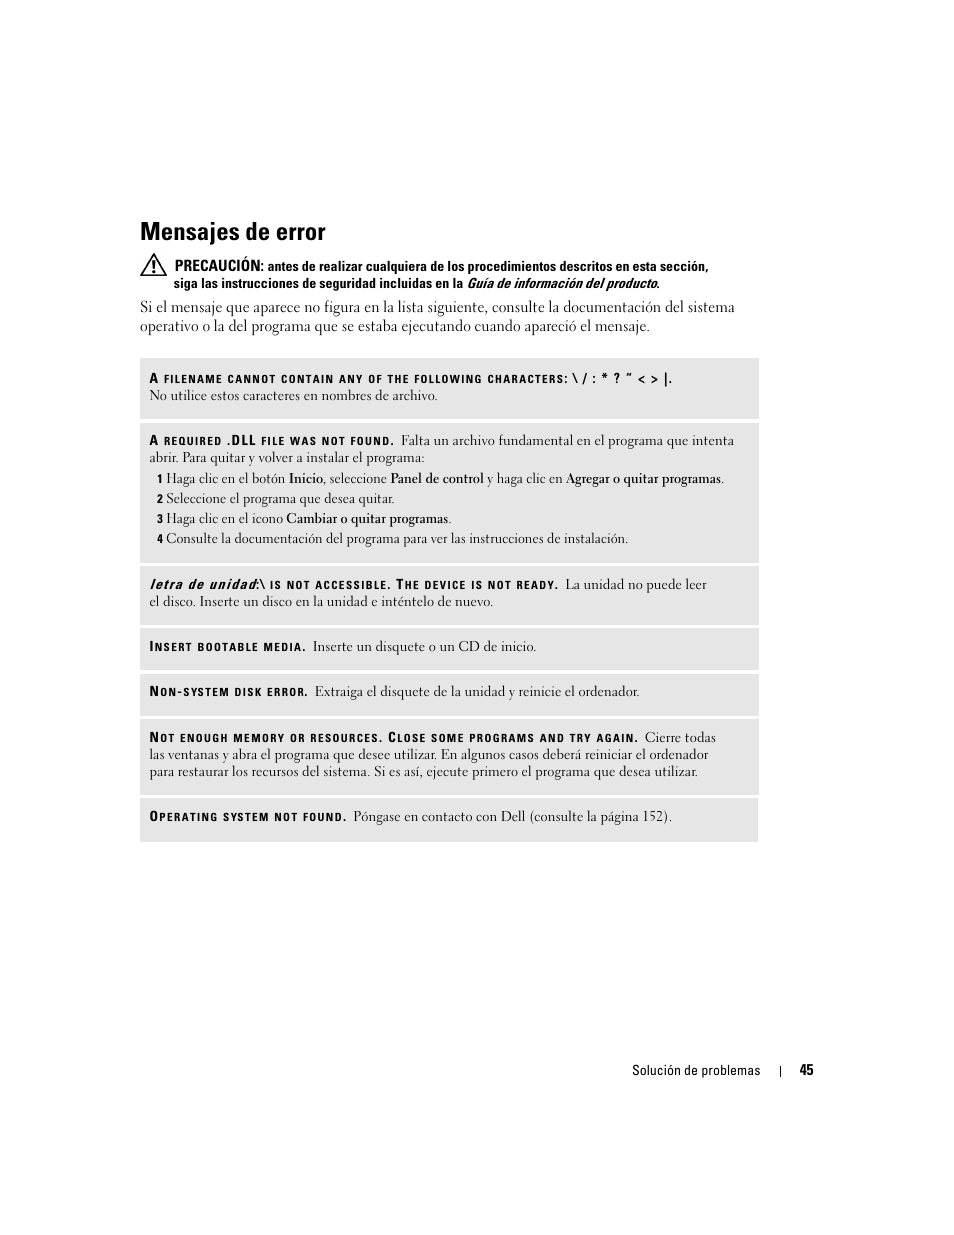 Mensajes de error | Dell XPS 600 Manual del usuario | Página 45 / 178